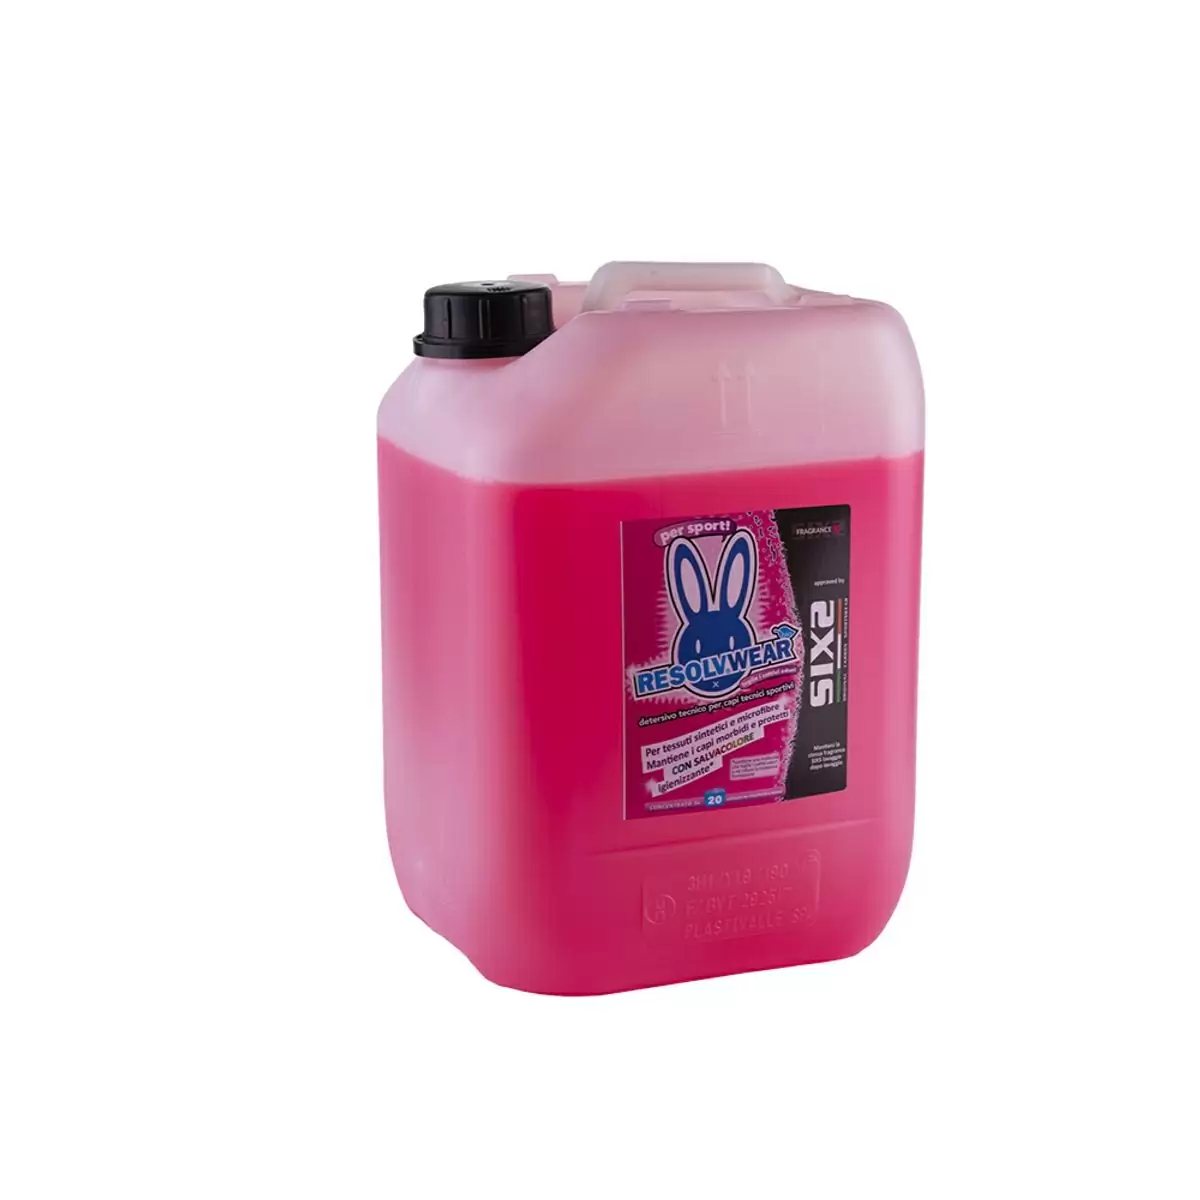 Fragrance X ResolvWear Detergent For Technical Sportswear 20L - image